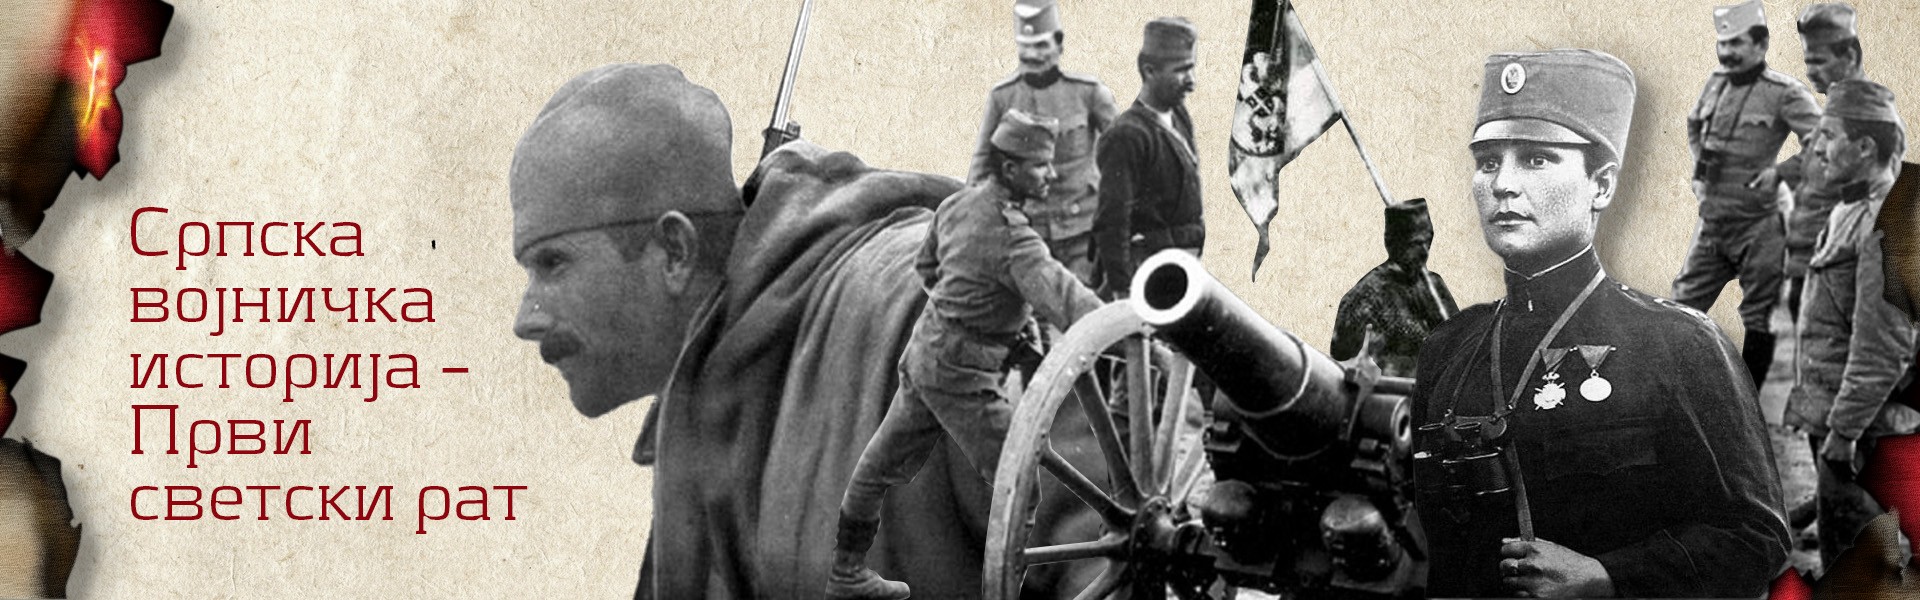 Serbian military history - World War I